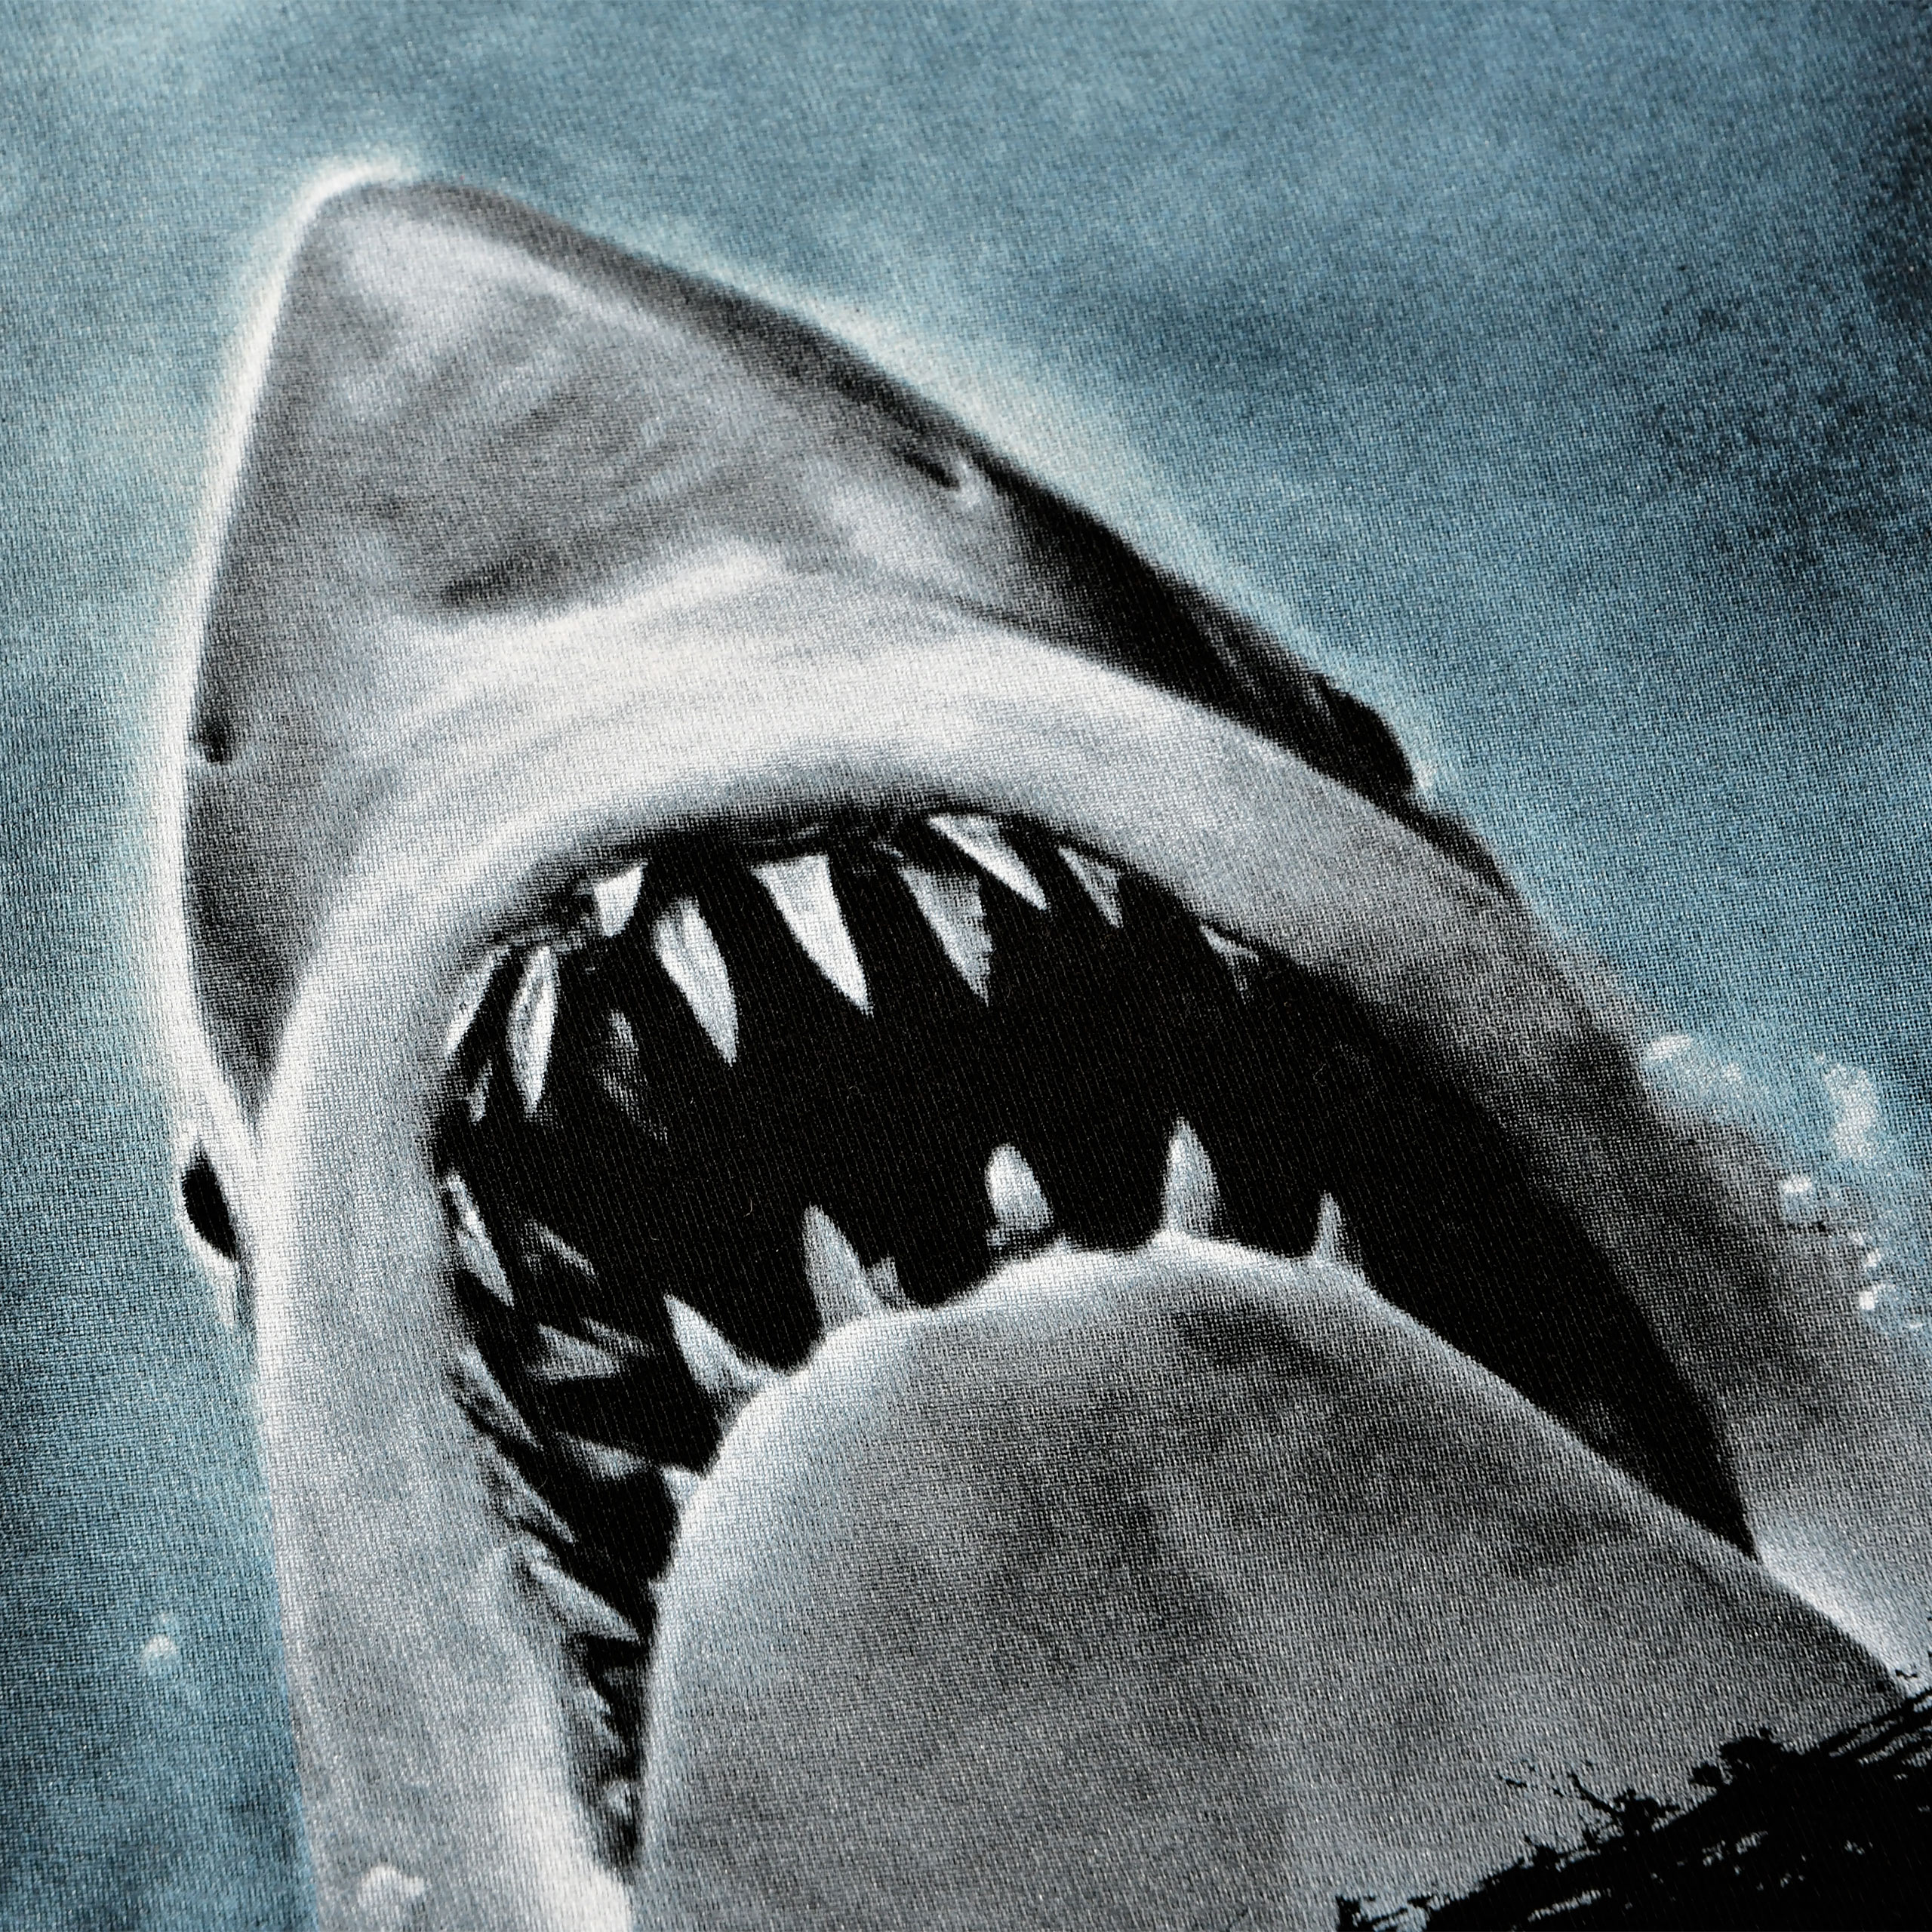 The White Shark - Jaws Poster Shirt Black